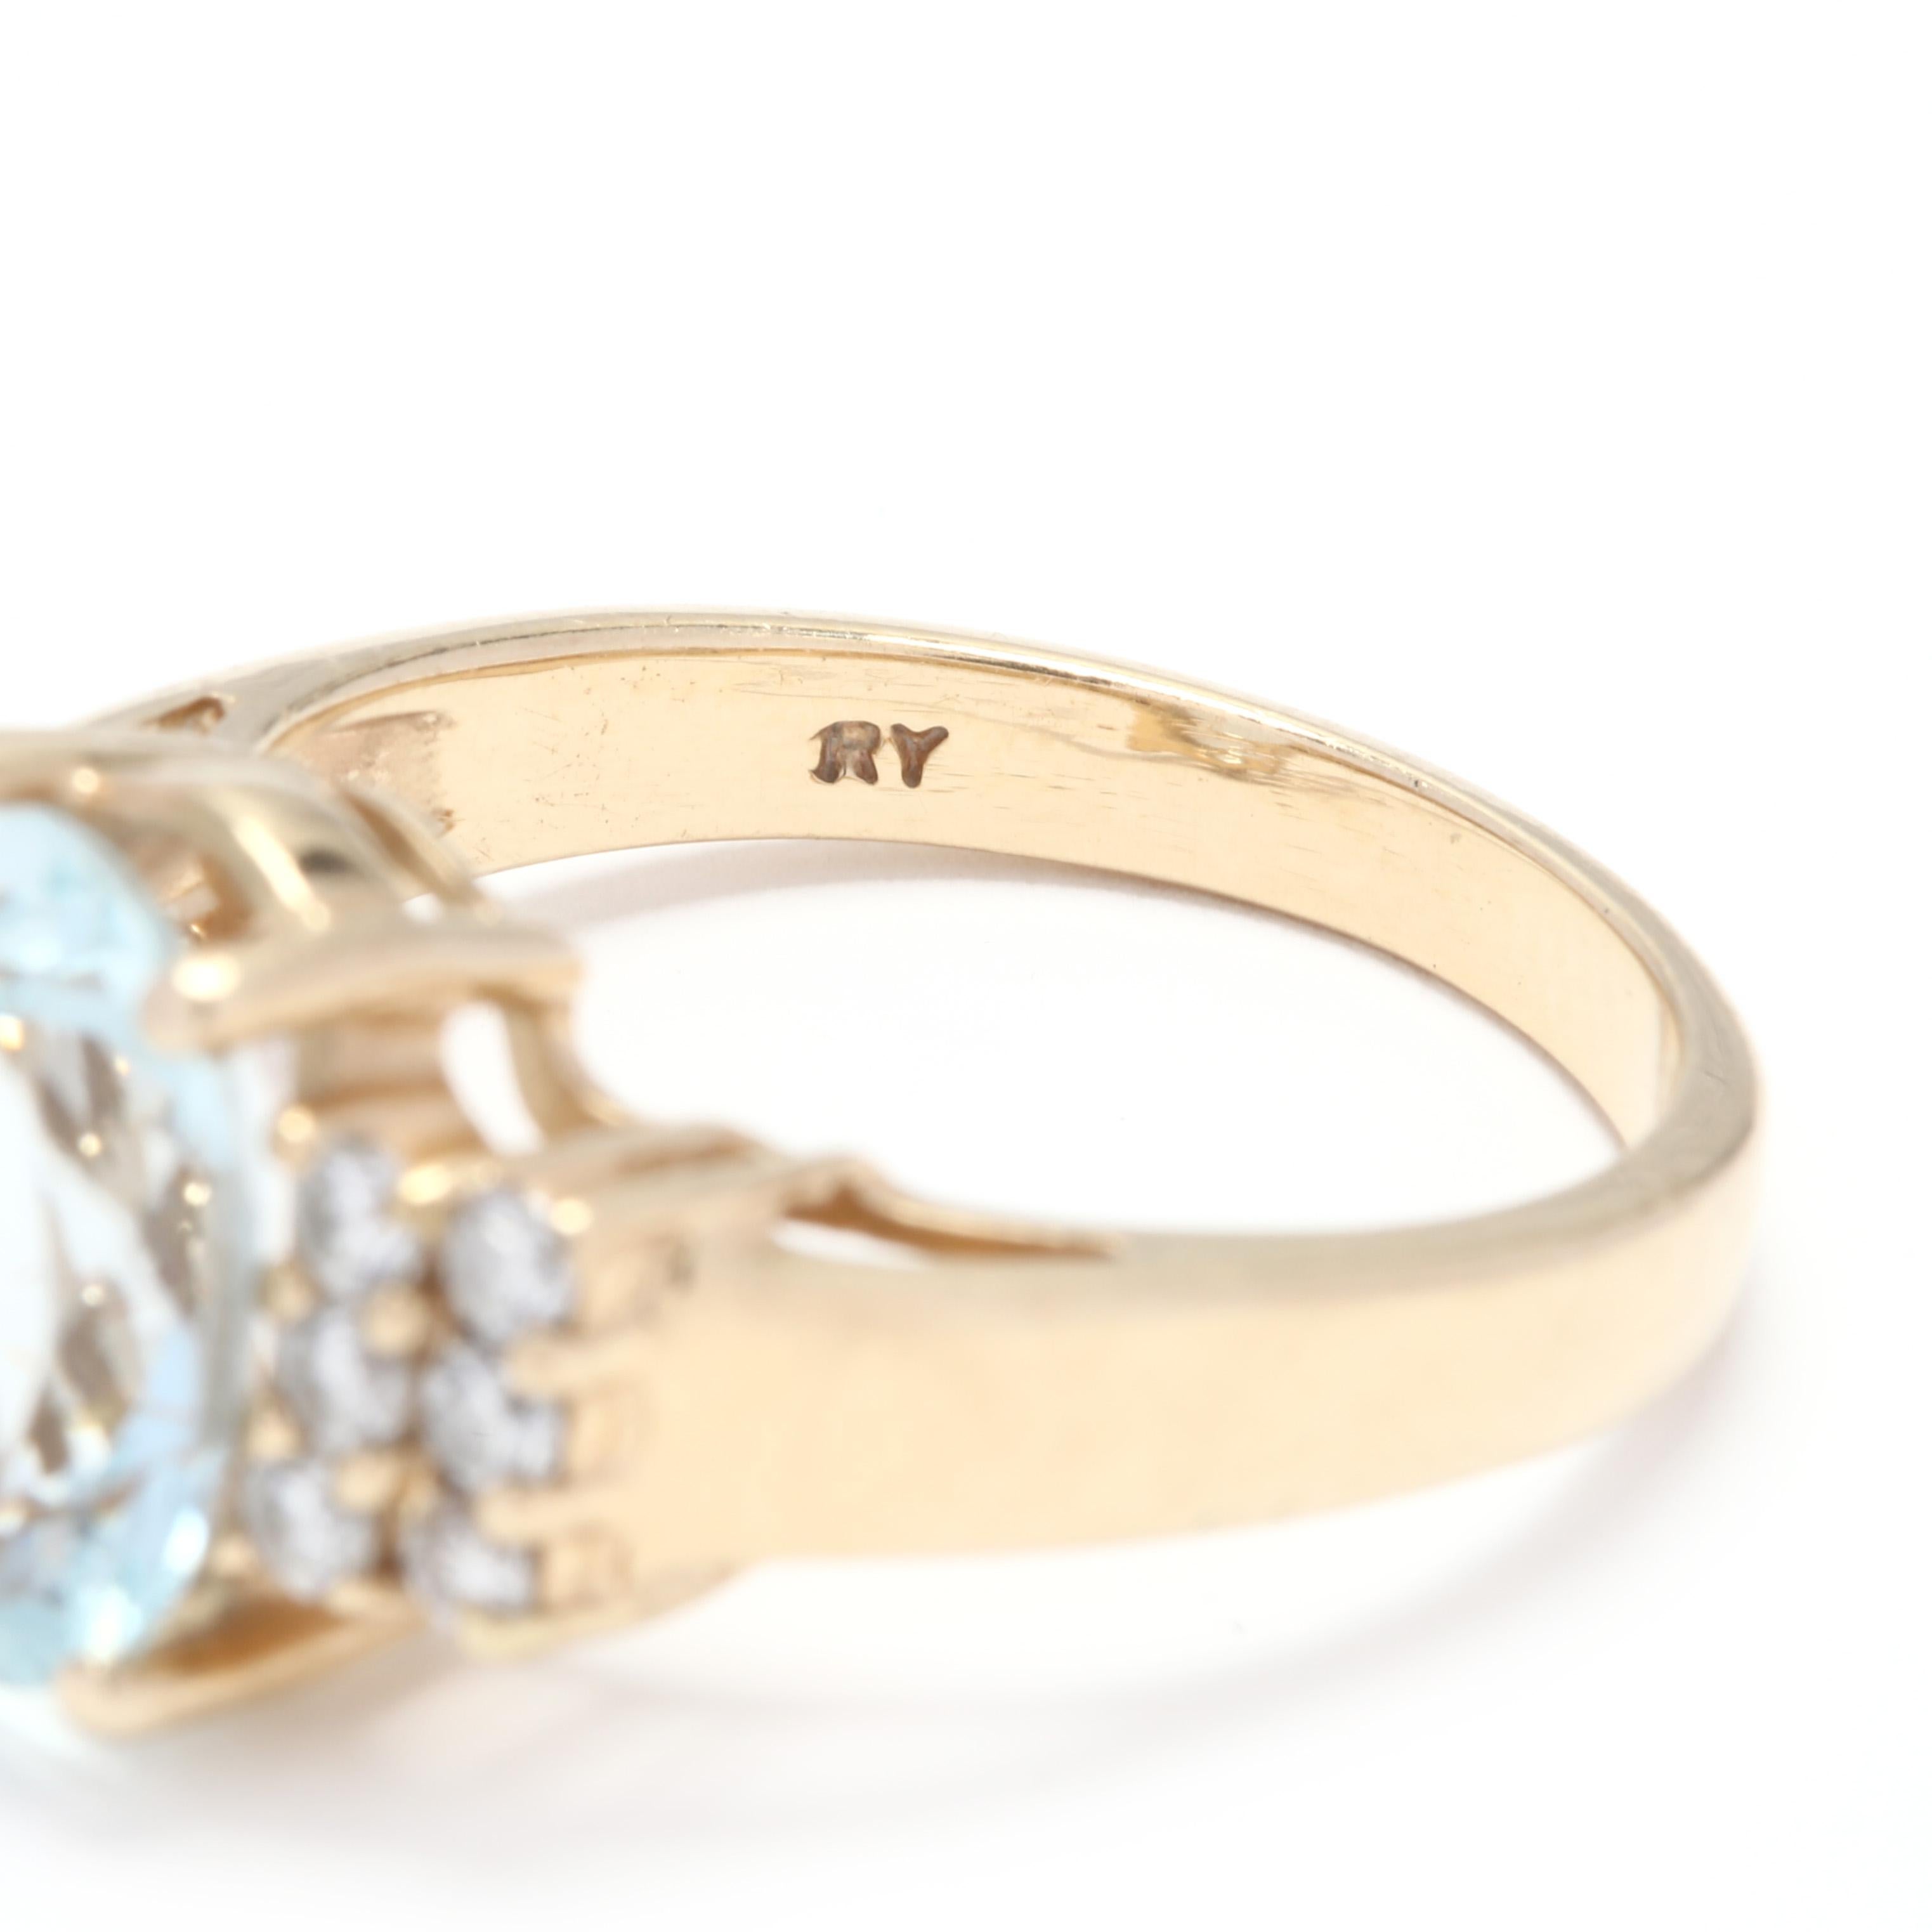 Oval Cut 14 Karat Yellow Gold, Aquamarine and Diamond Ring, March Birthstone Ring